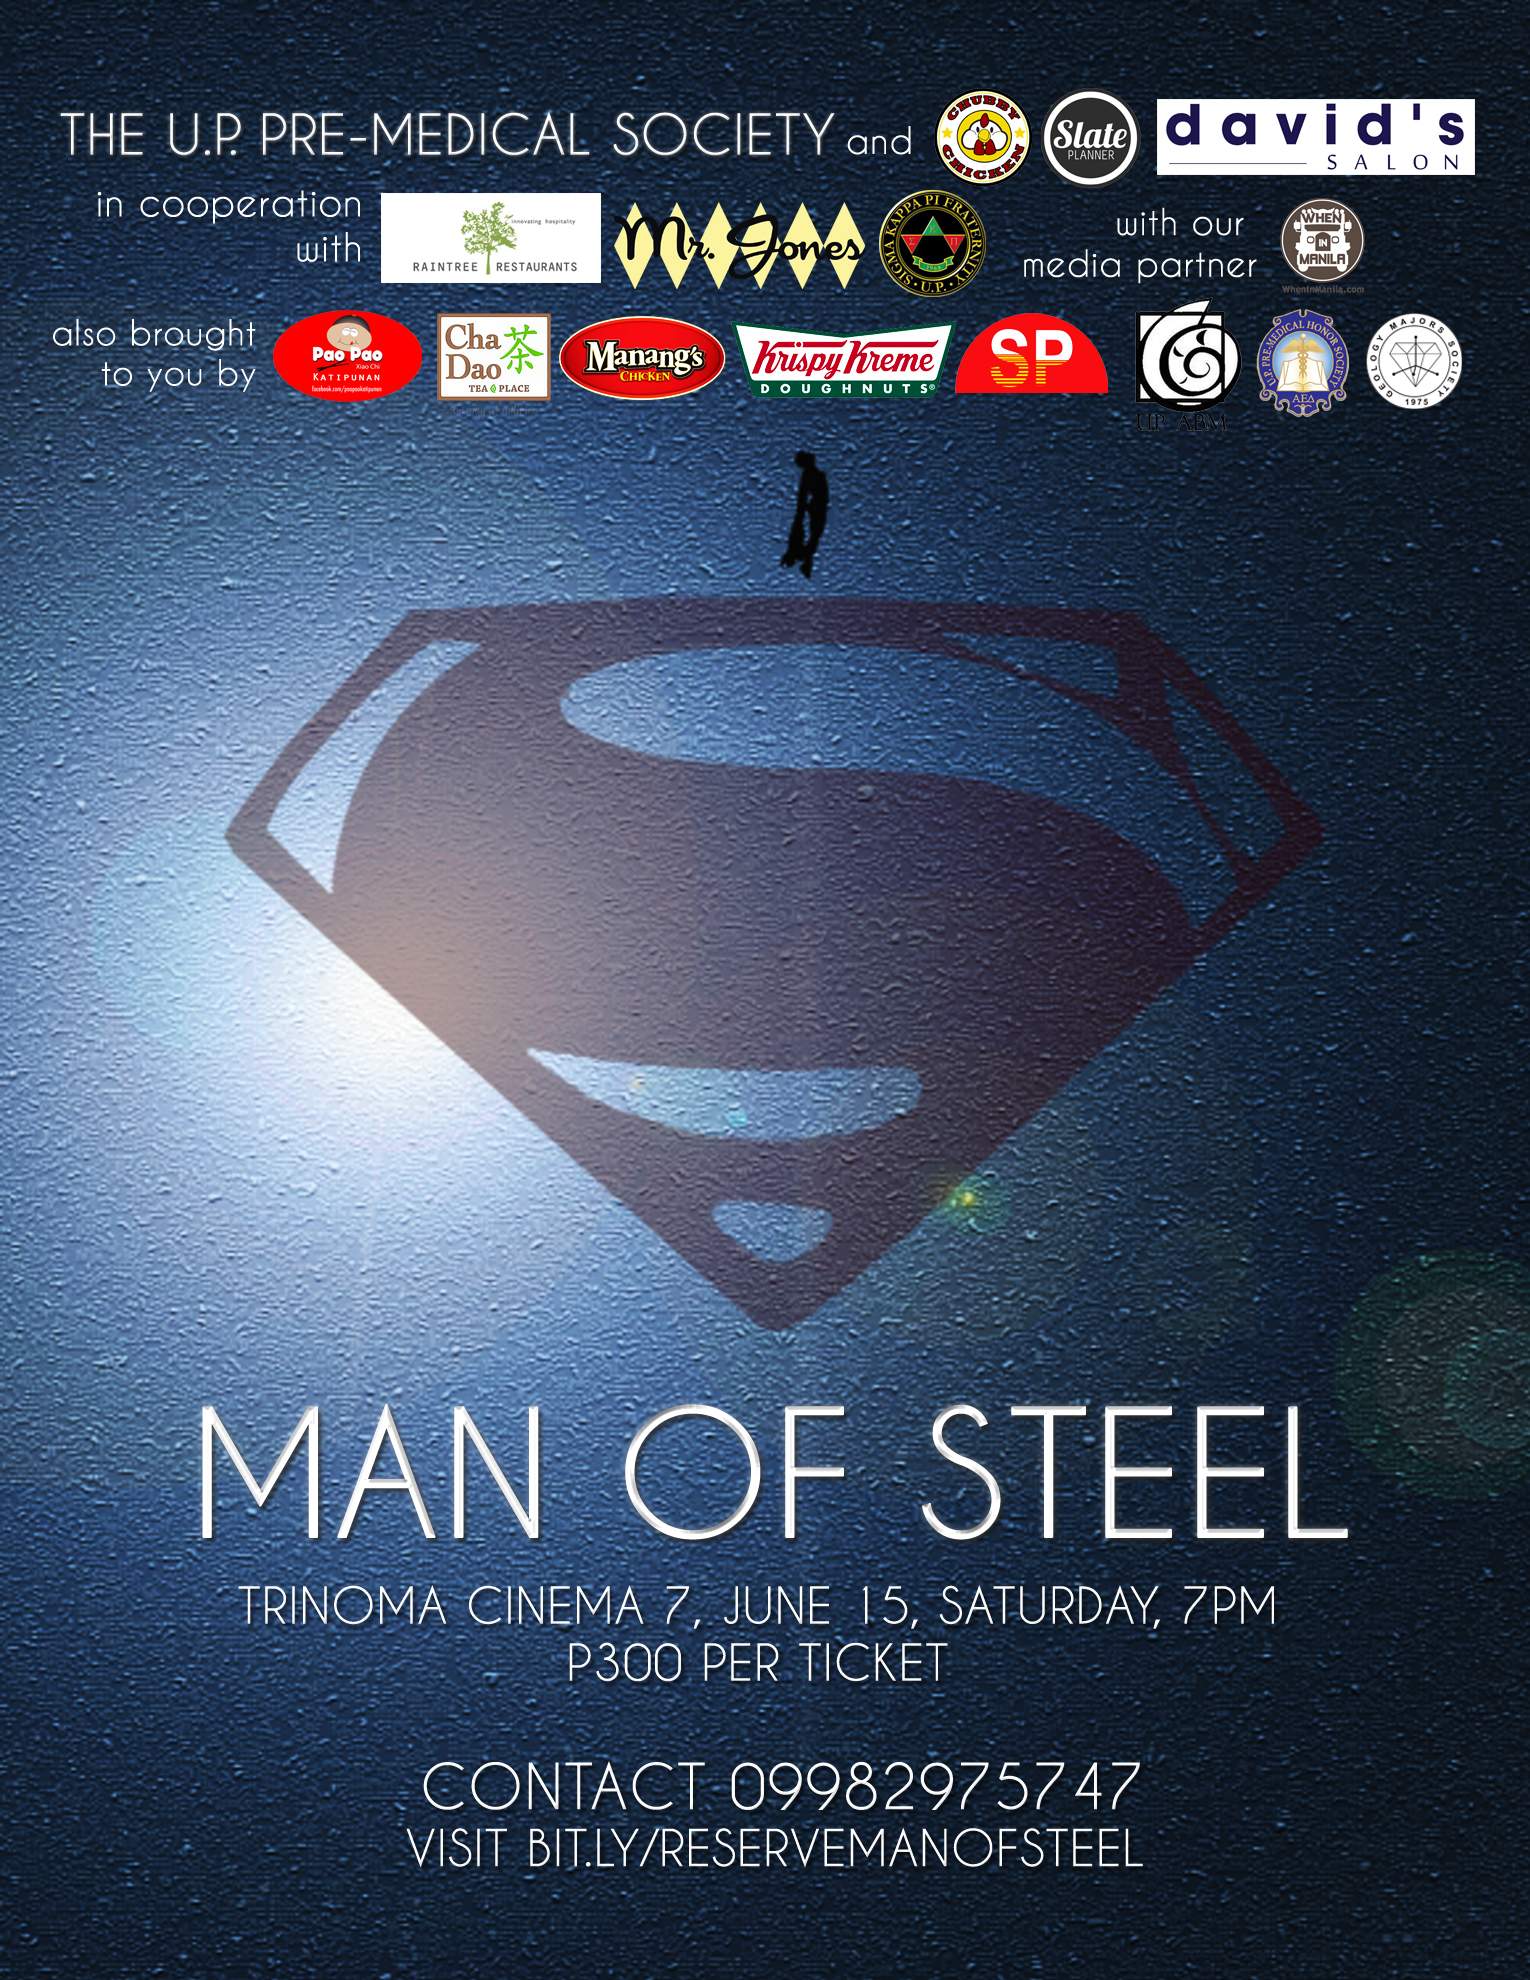 Man of Steel Poster (500kb)